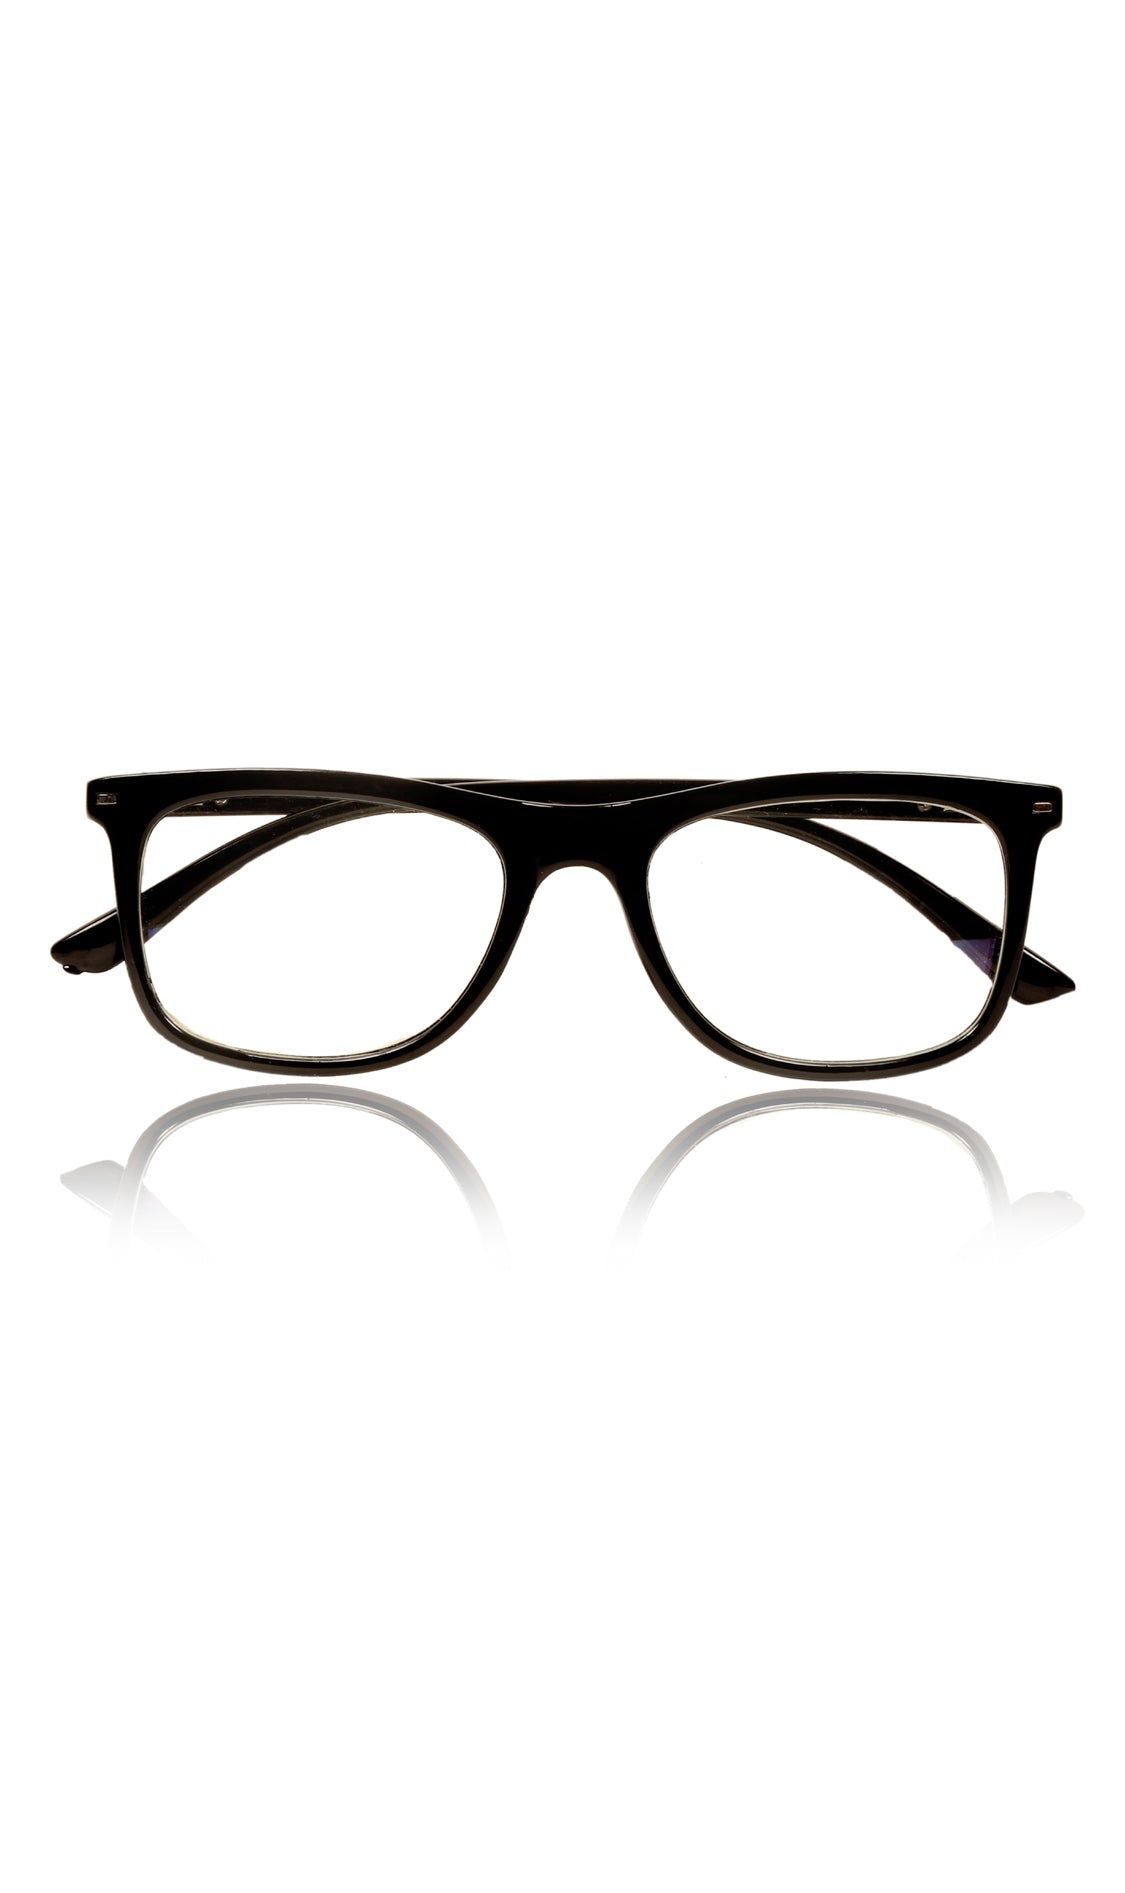 Jodykoes® Colour Frame Series Eyewears | Blue Rays Protection Warfare Stylish Spectacles With Anti Glare Eyeglasses For Men and Women Eyewears (Black) - Jodykoes ®